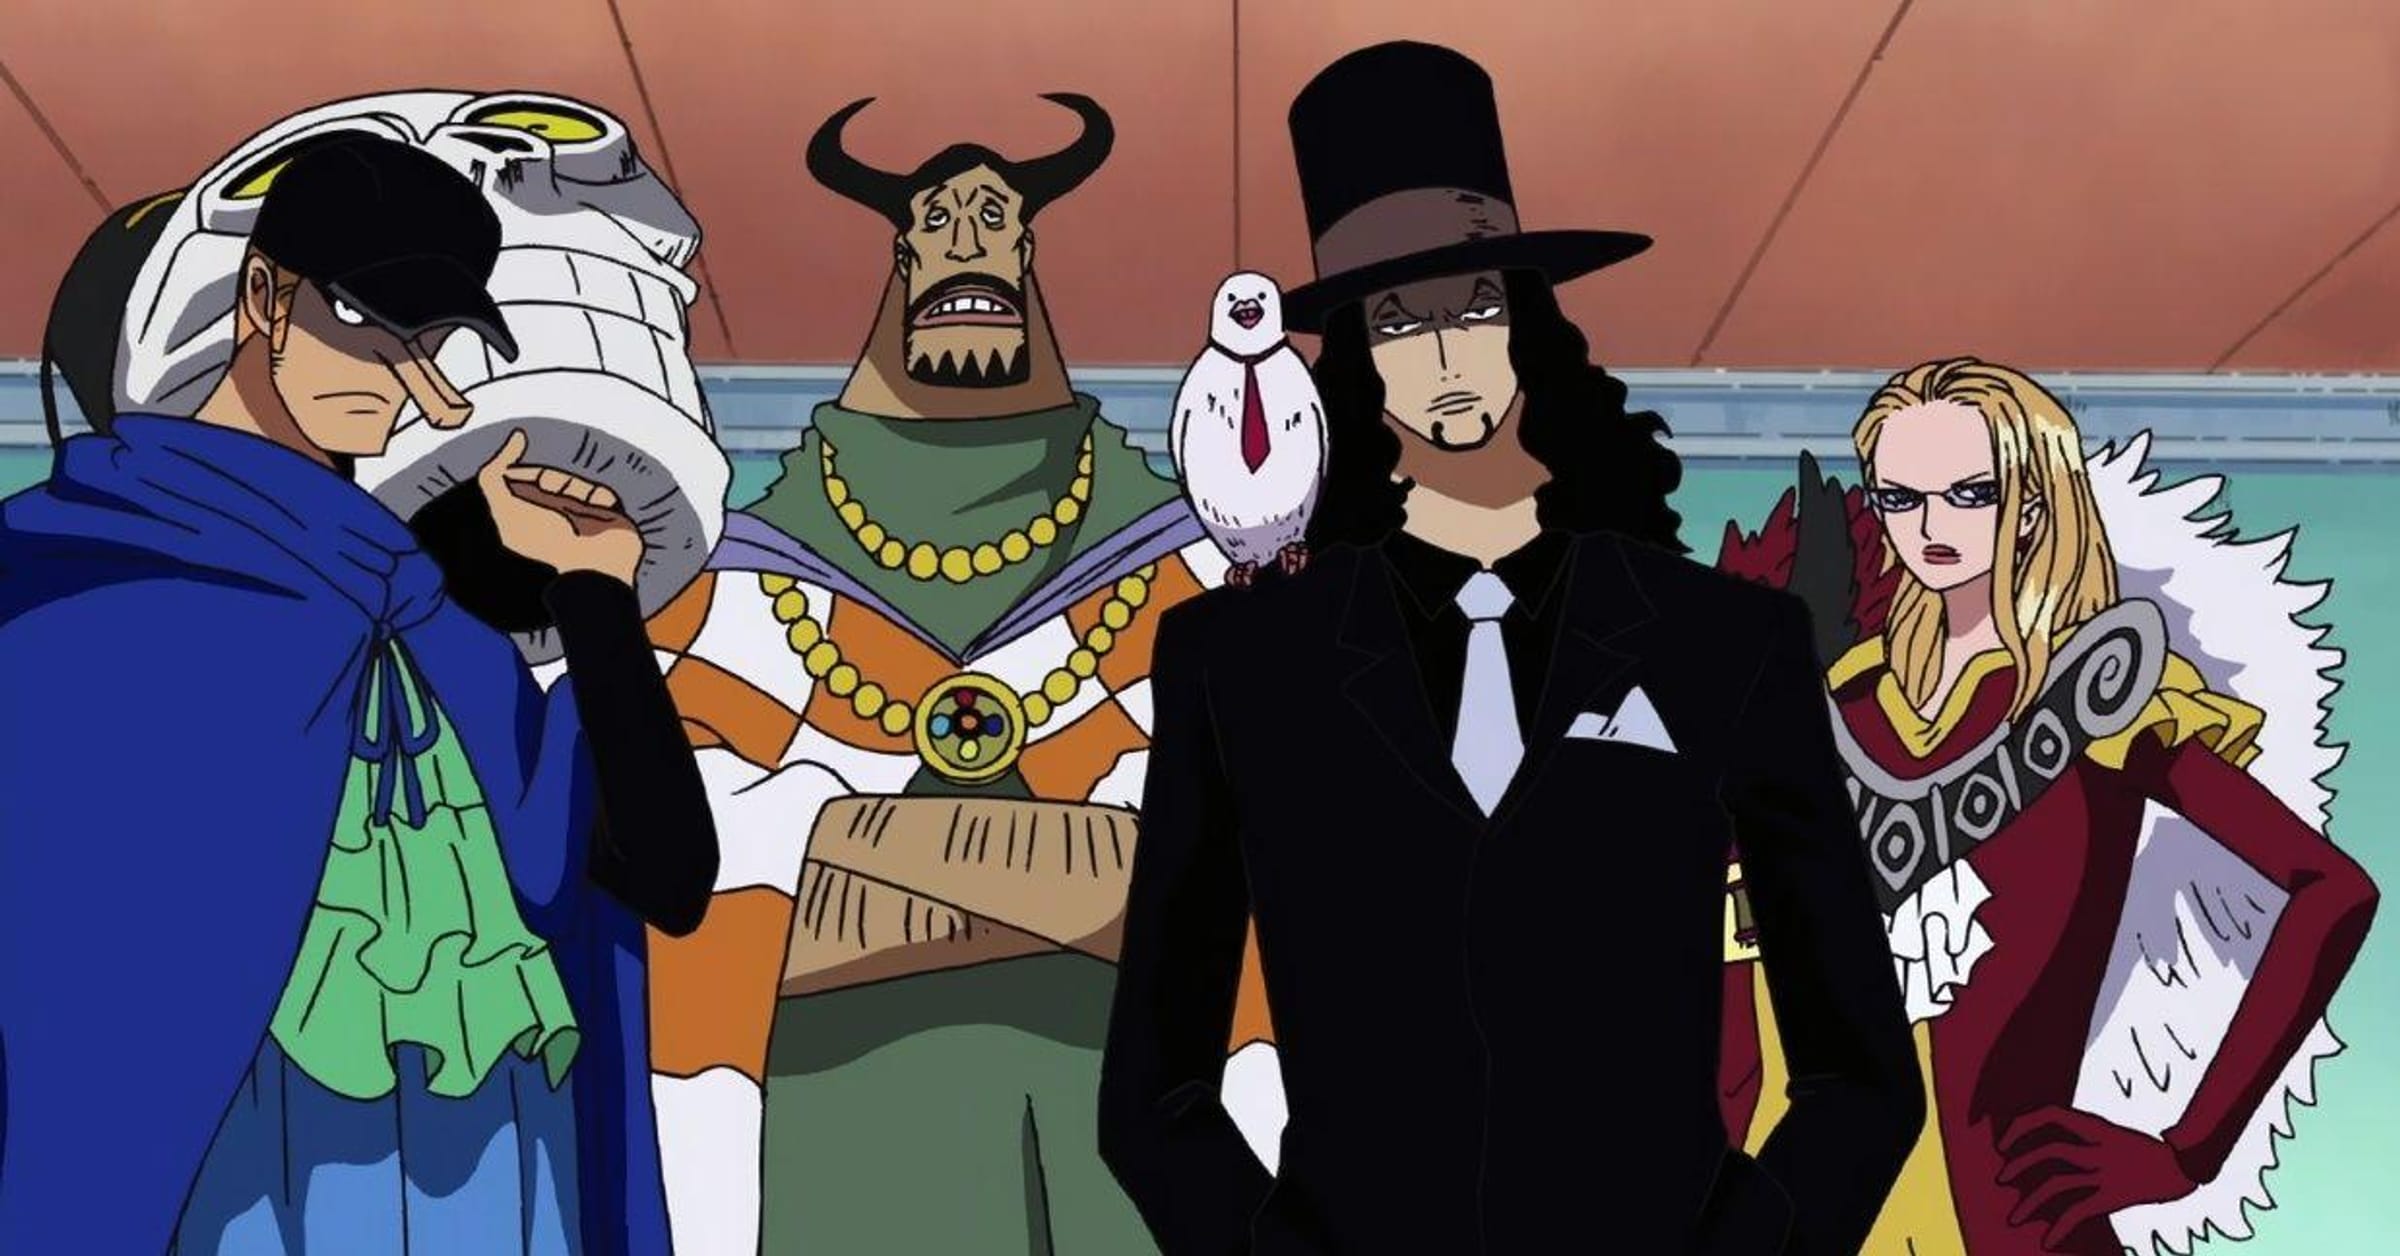 One Piece Reveals a Shocking Straw Hat Betrayal